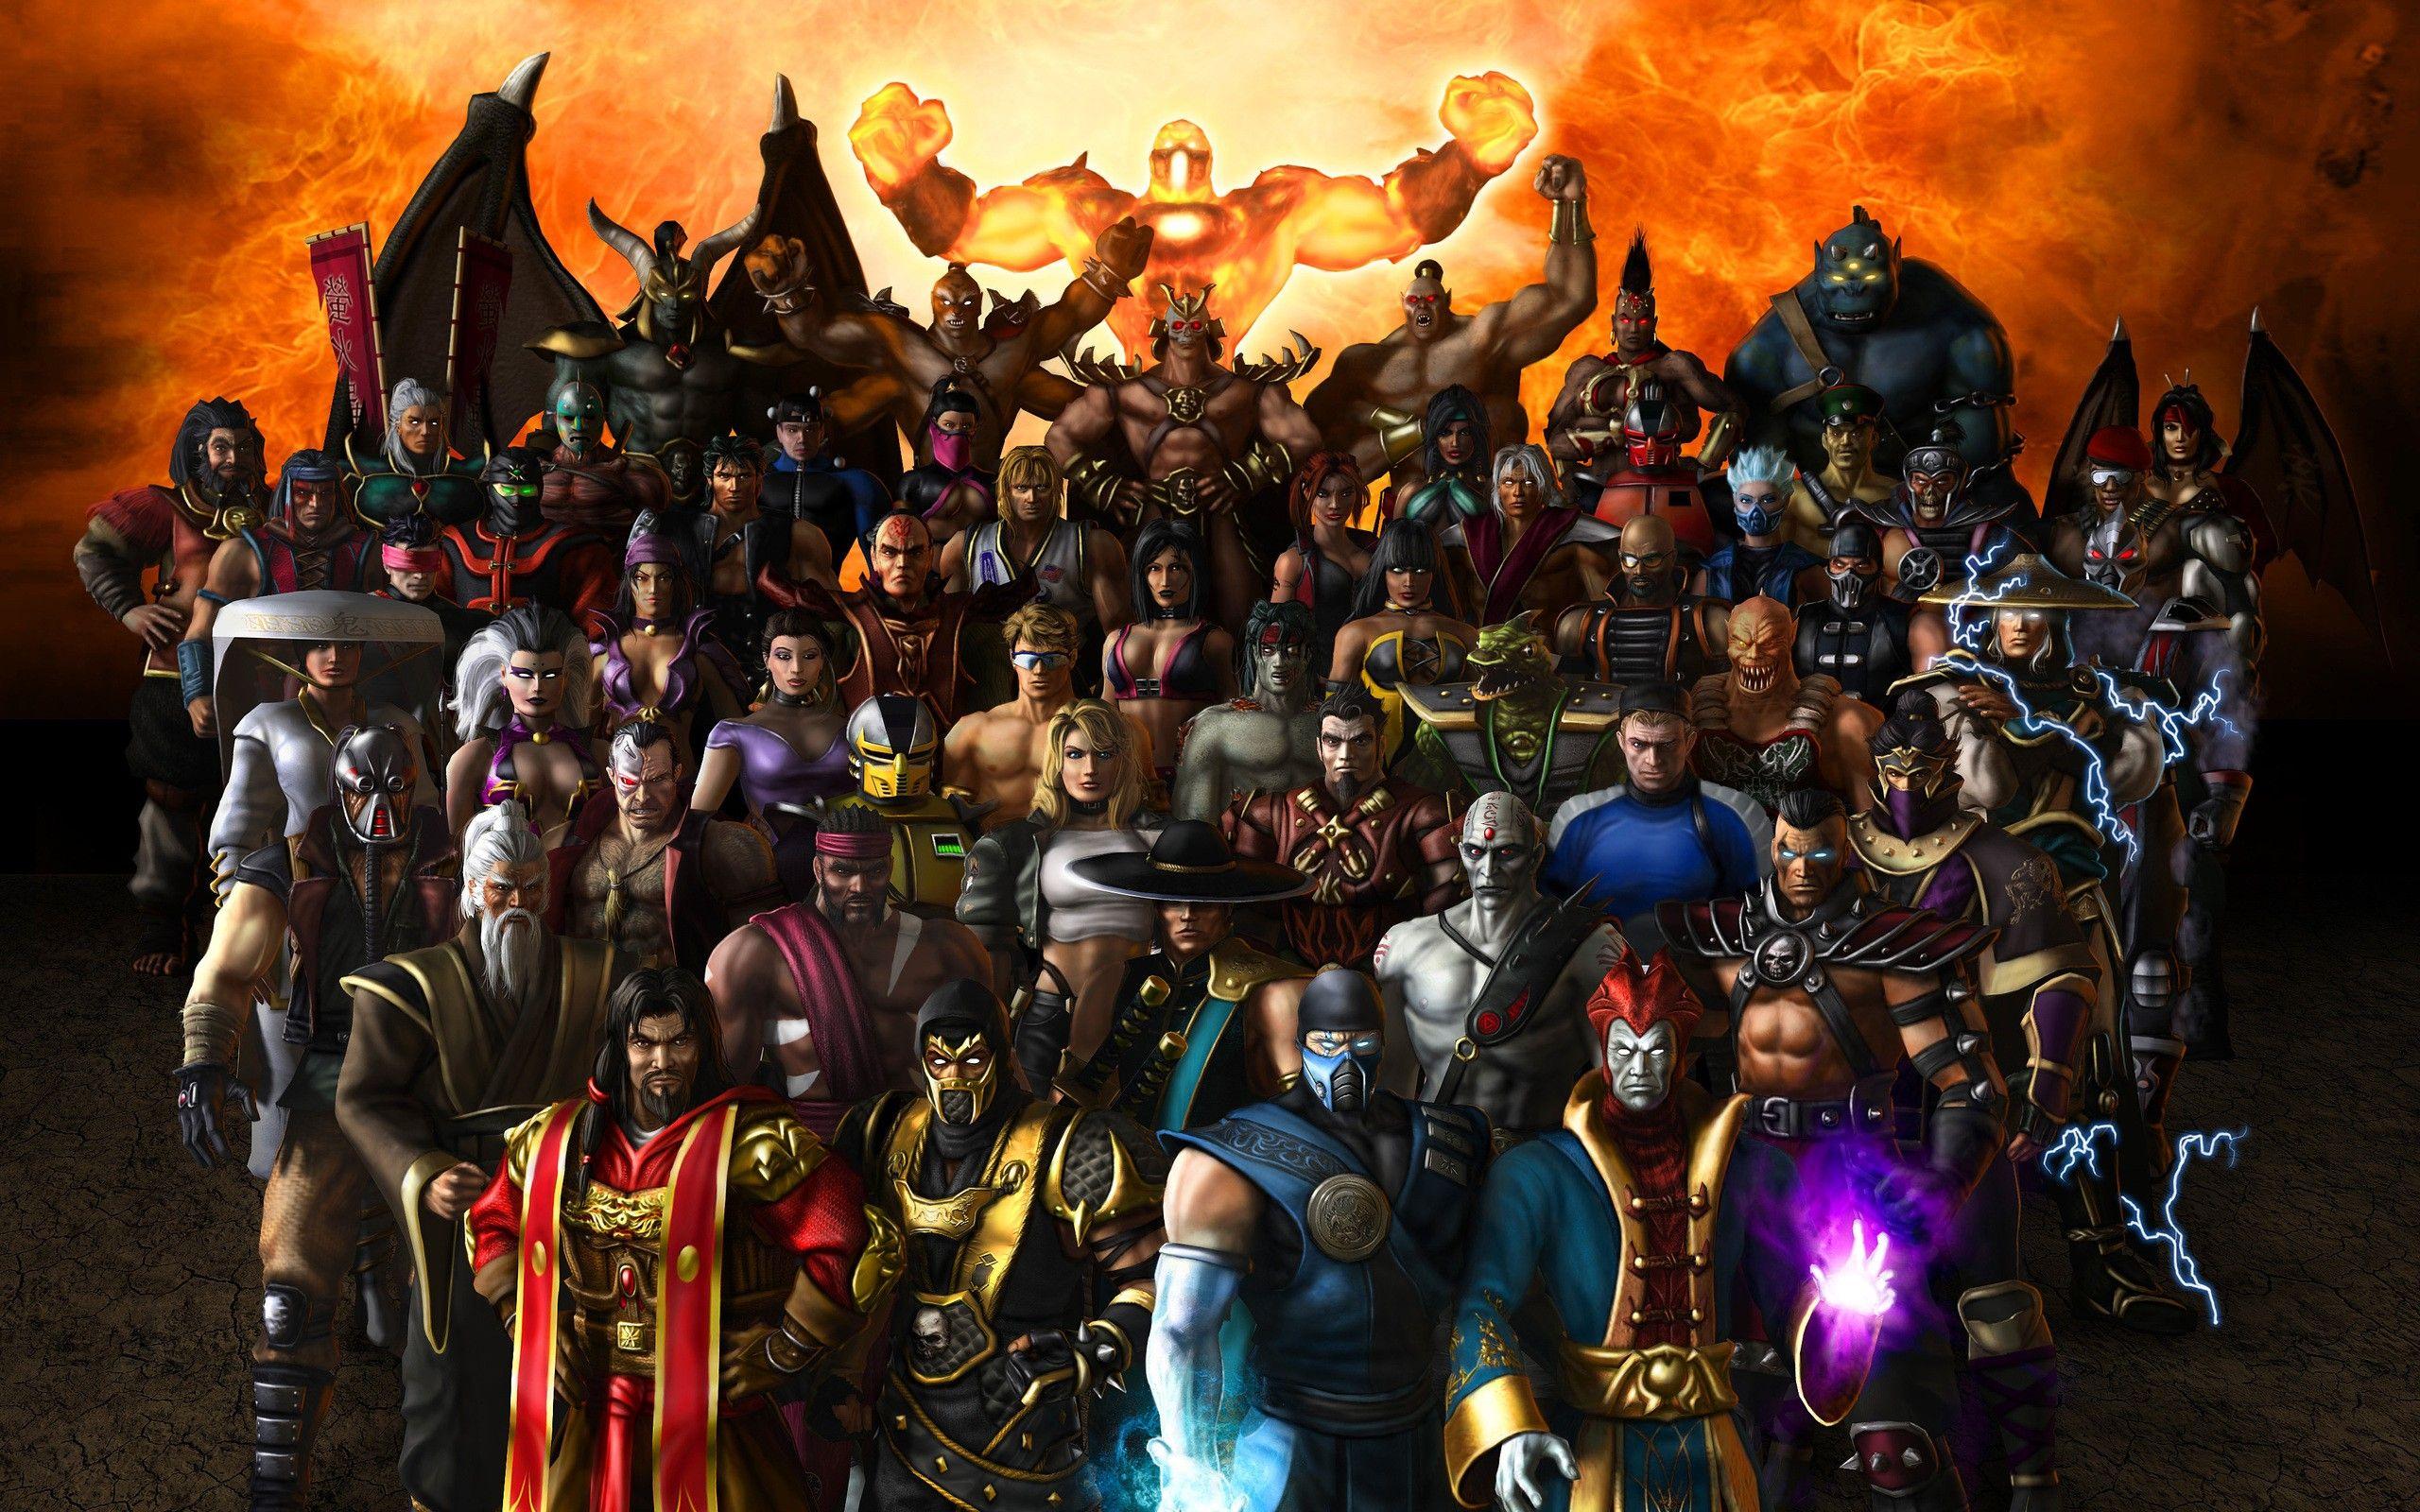 Download the Mortal Kombat Characters Wallpaper, Mortal Kombat